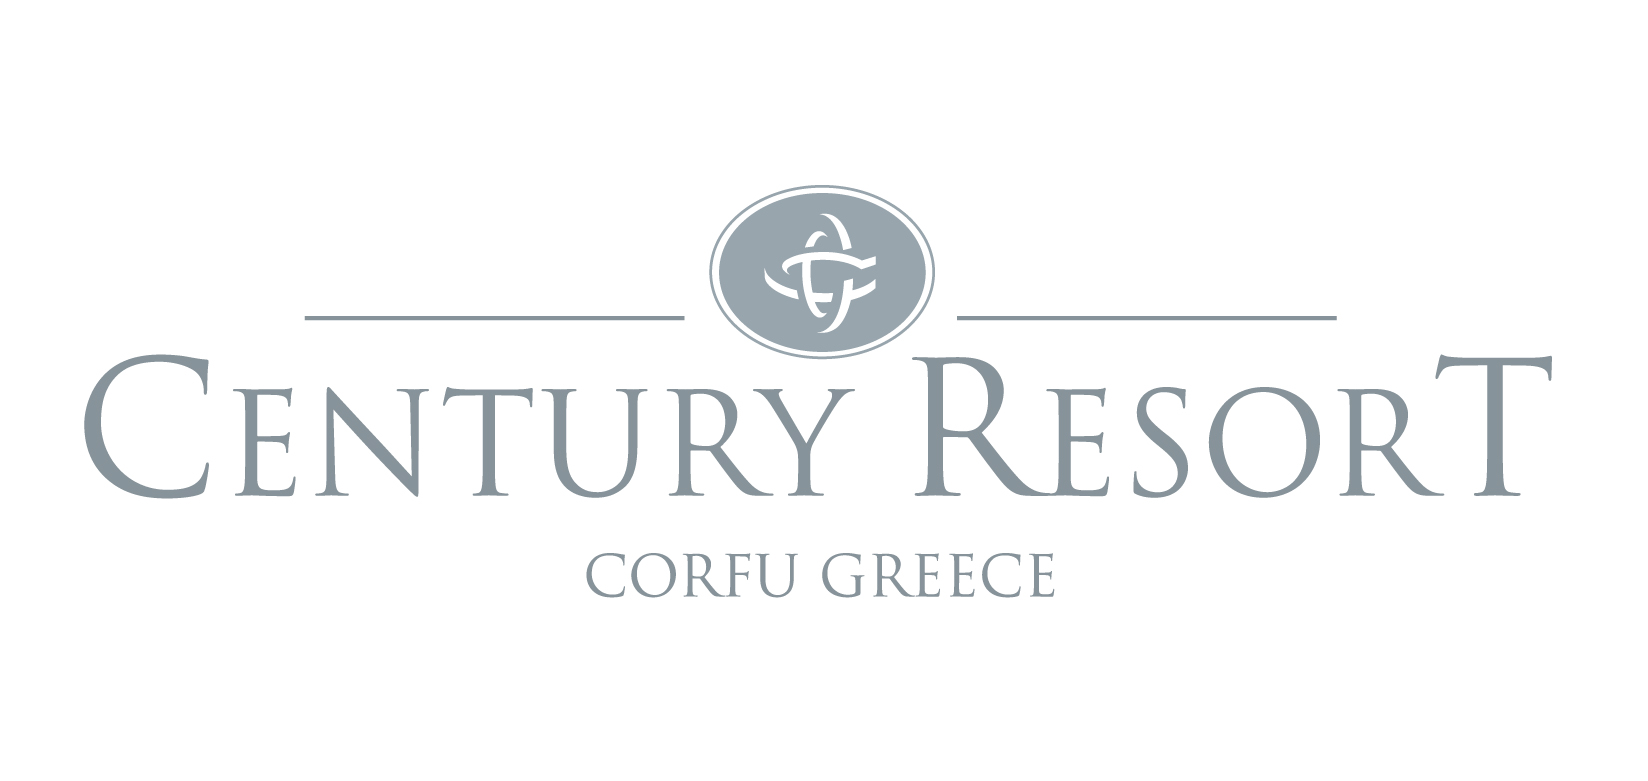 Century Resort logo